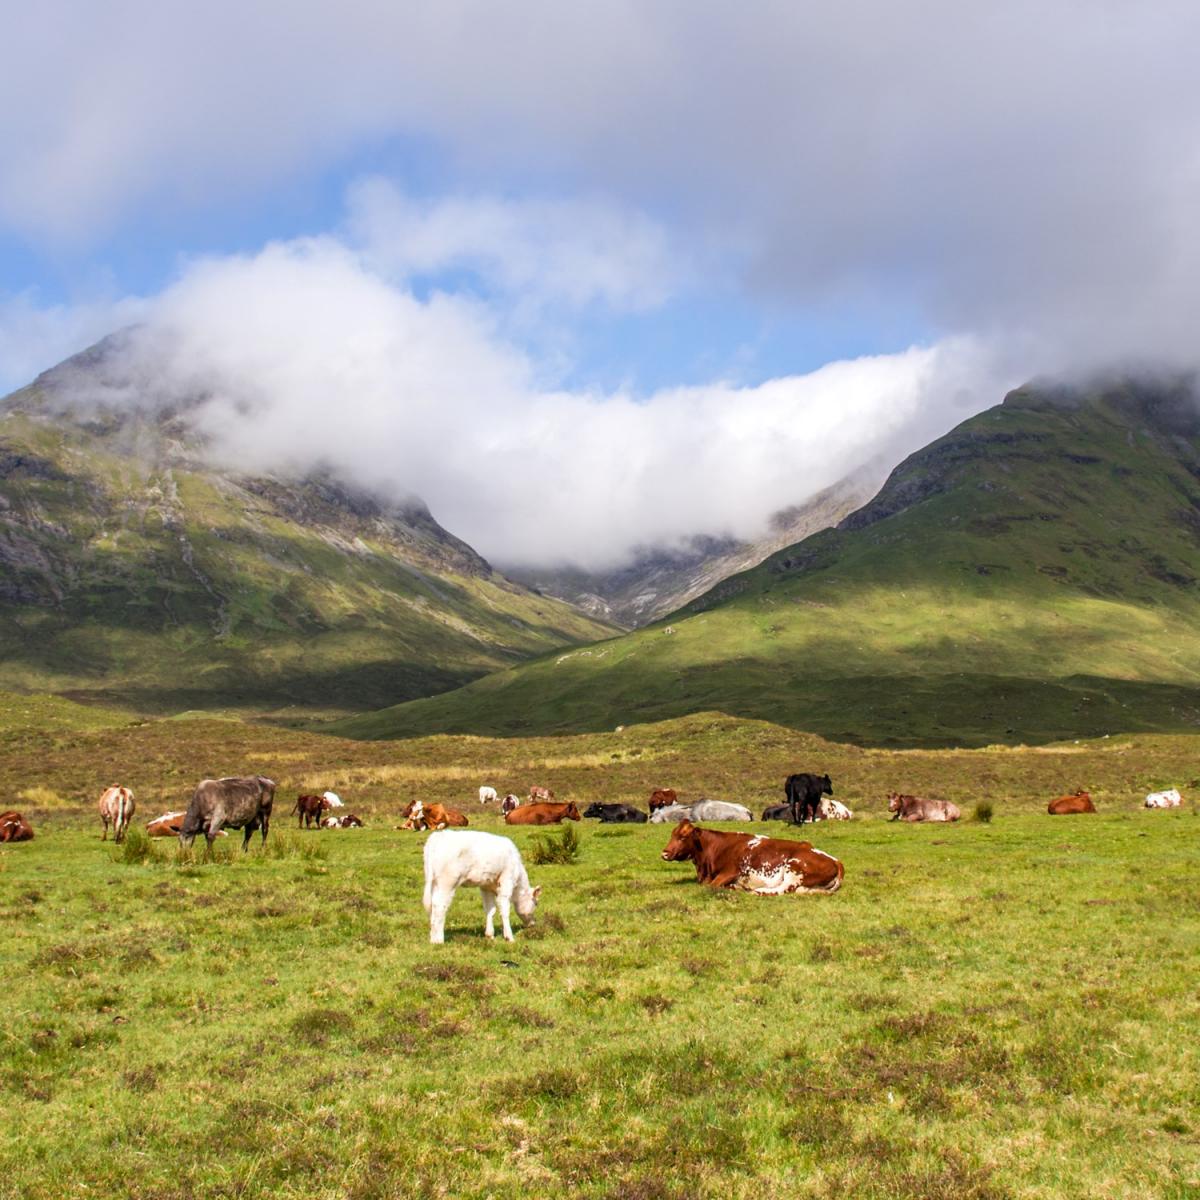 Robert Harrison (Glenartney, Comrie, Perthshire) - A photo I took recently on the Isle of Skye......proper hill cattle